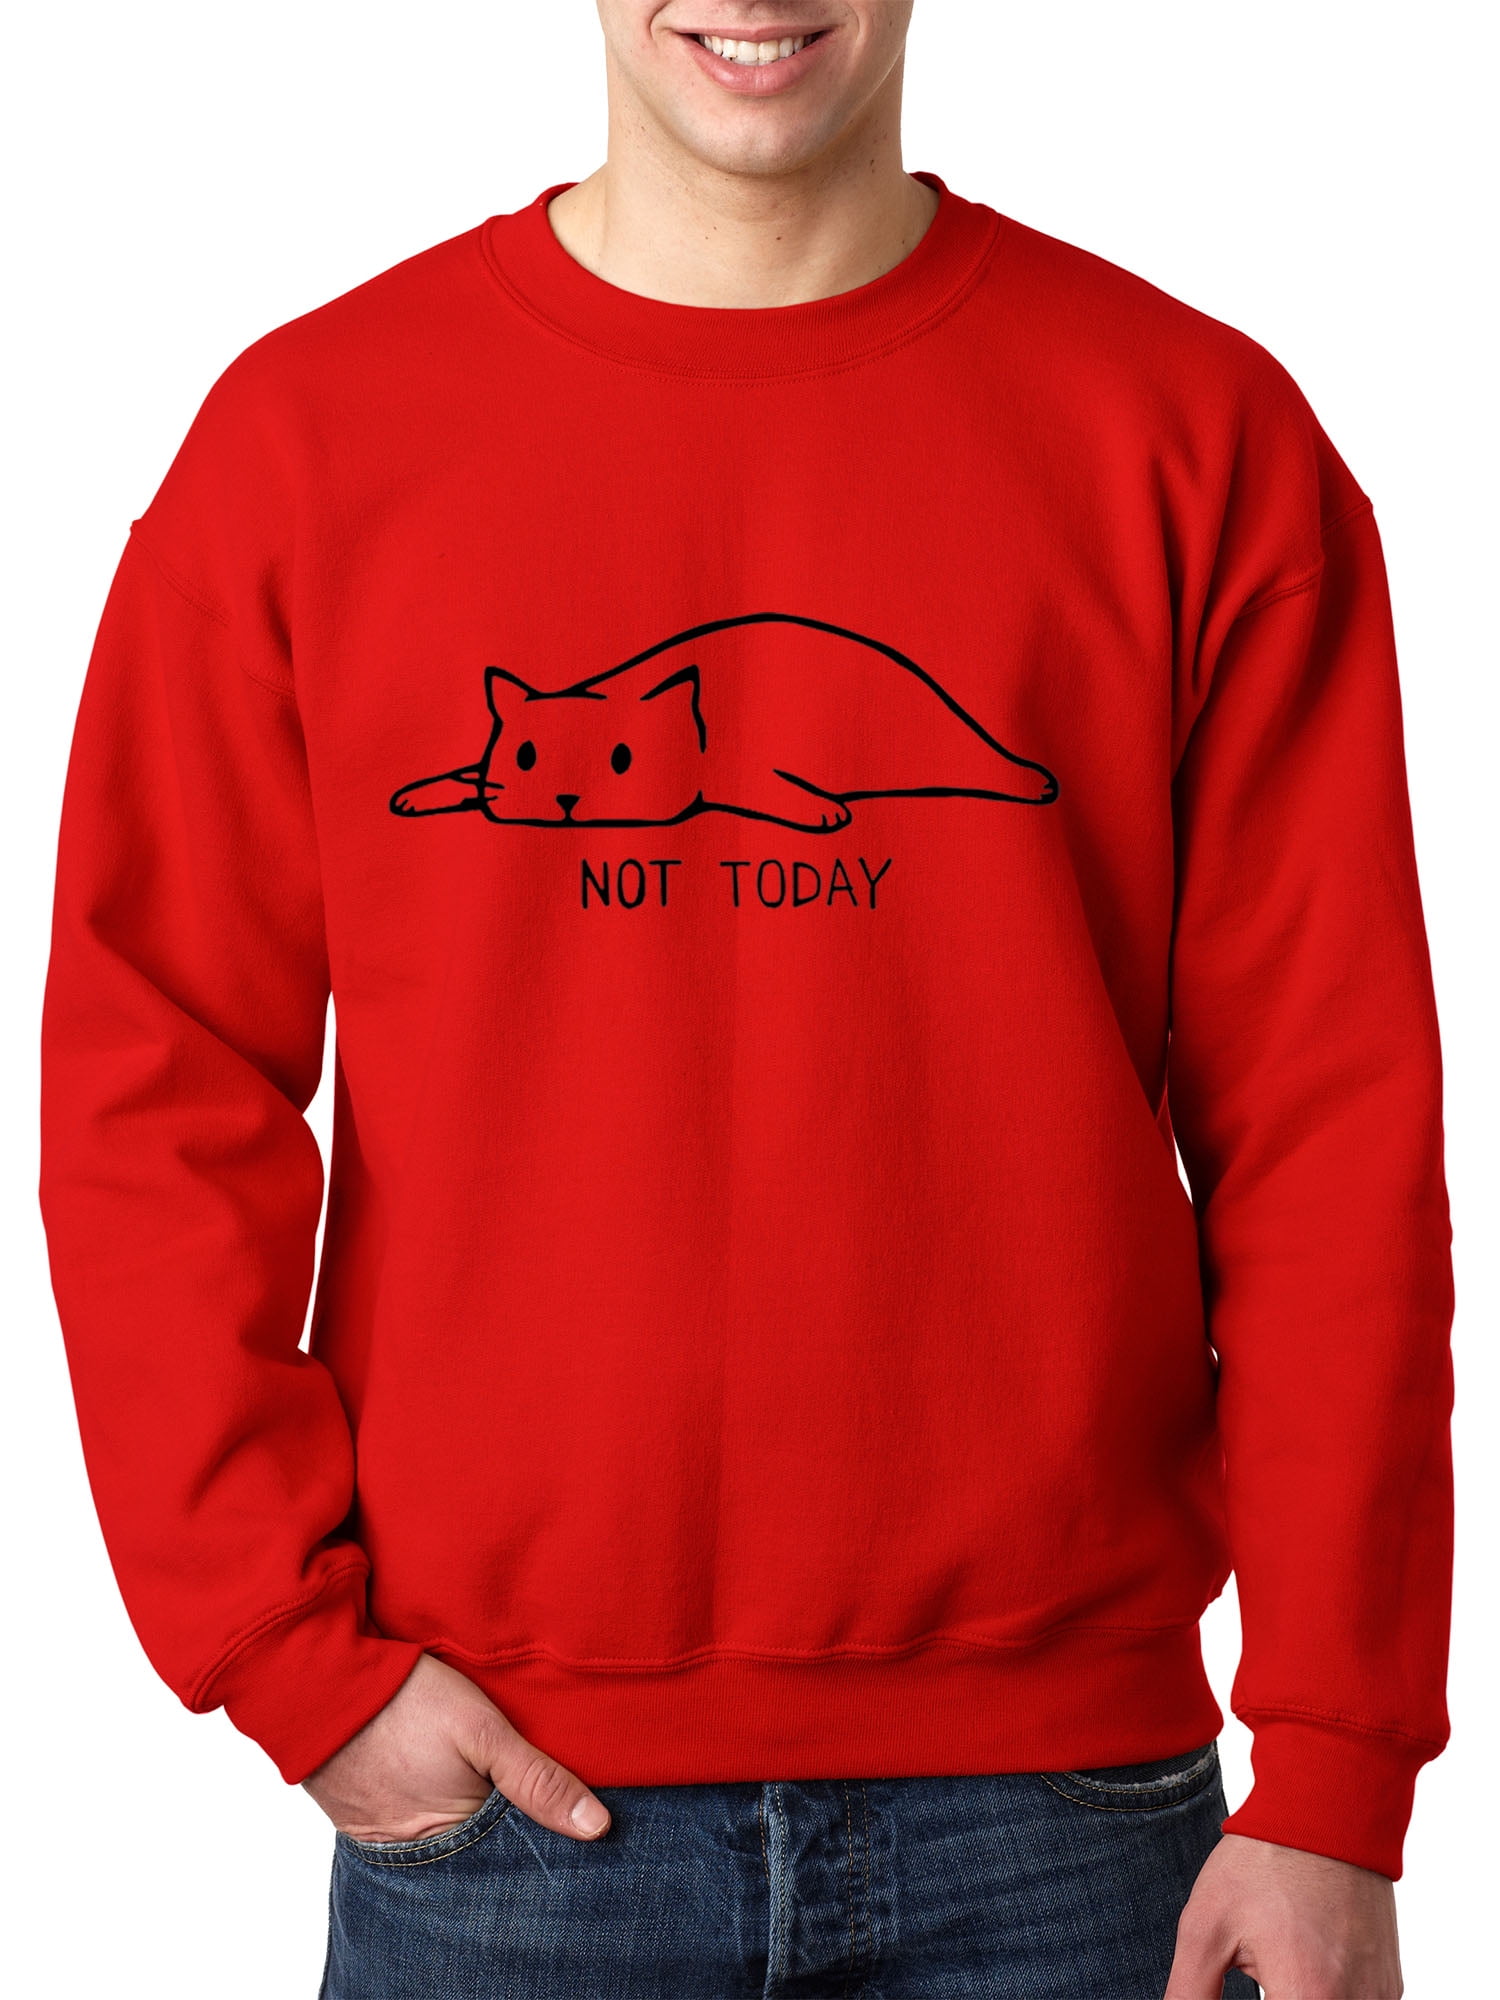 Mens Not Today T-Shirt Cat funny lazy sleepy kitty top gift long sleeve